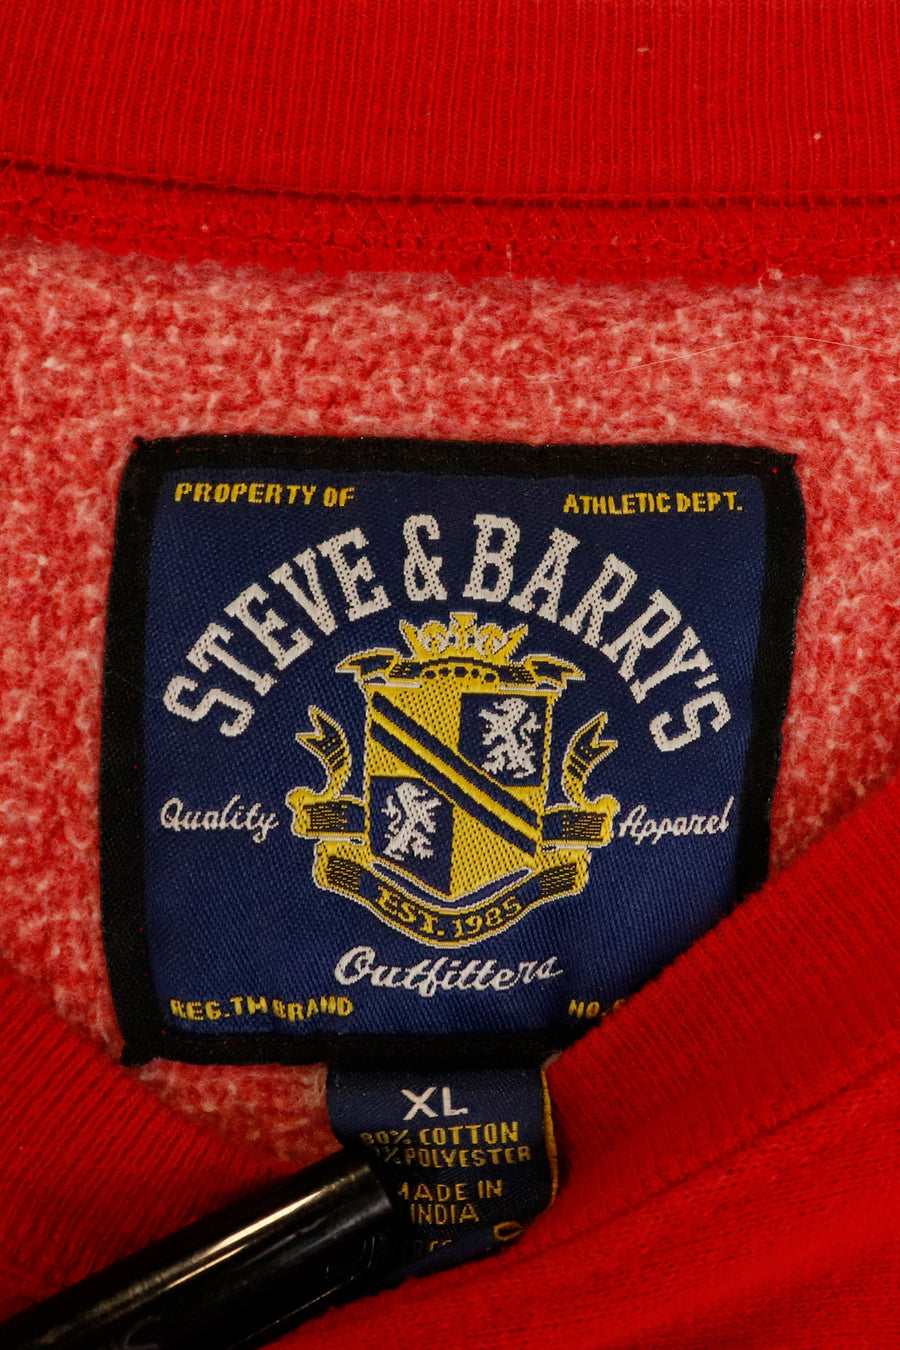 Vintage Northern Illinois Spell Out Sweatshirt Sz XL